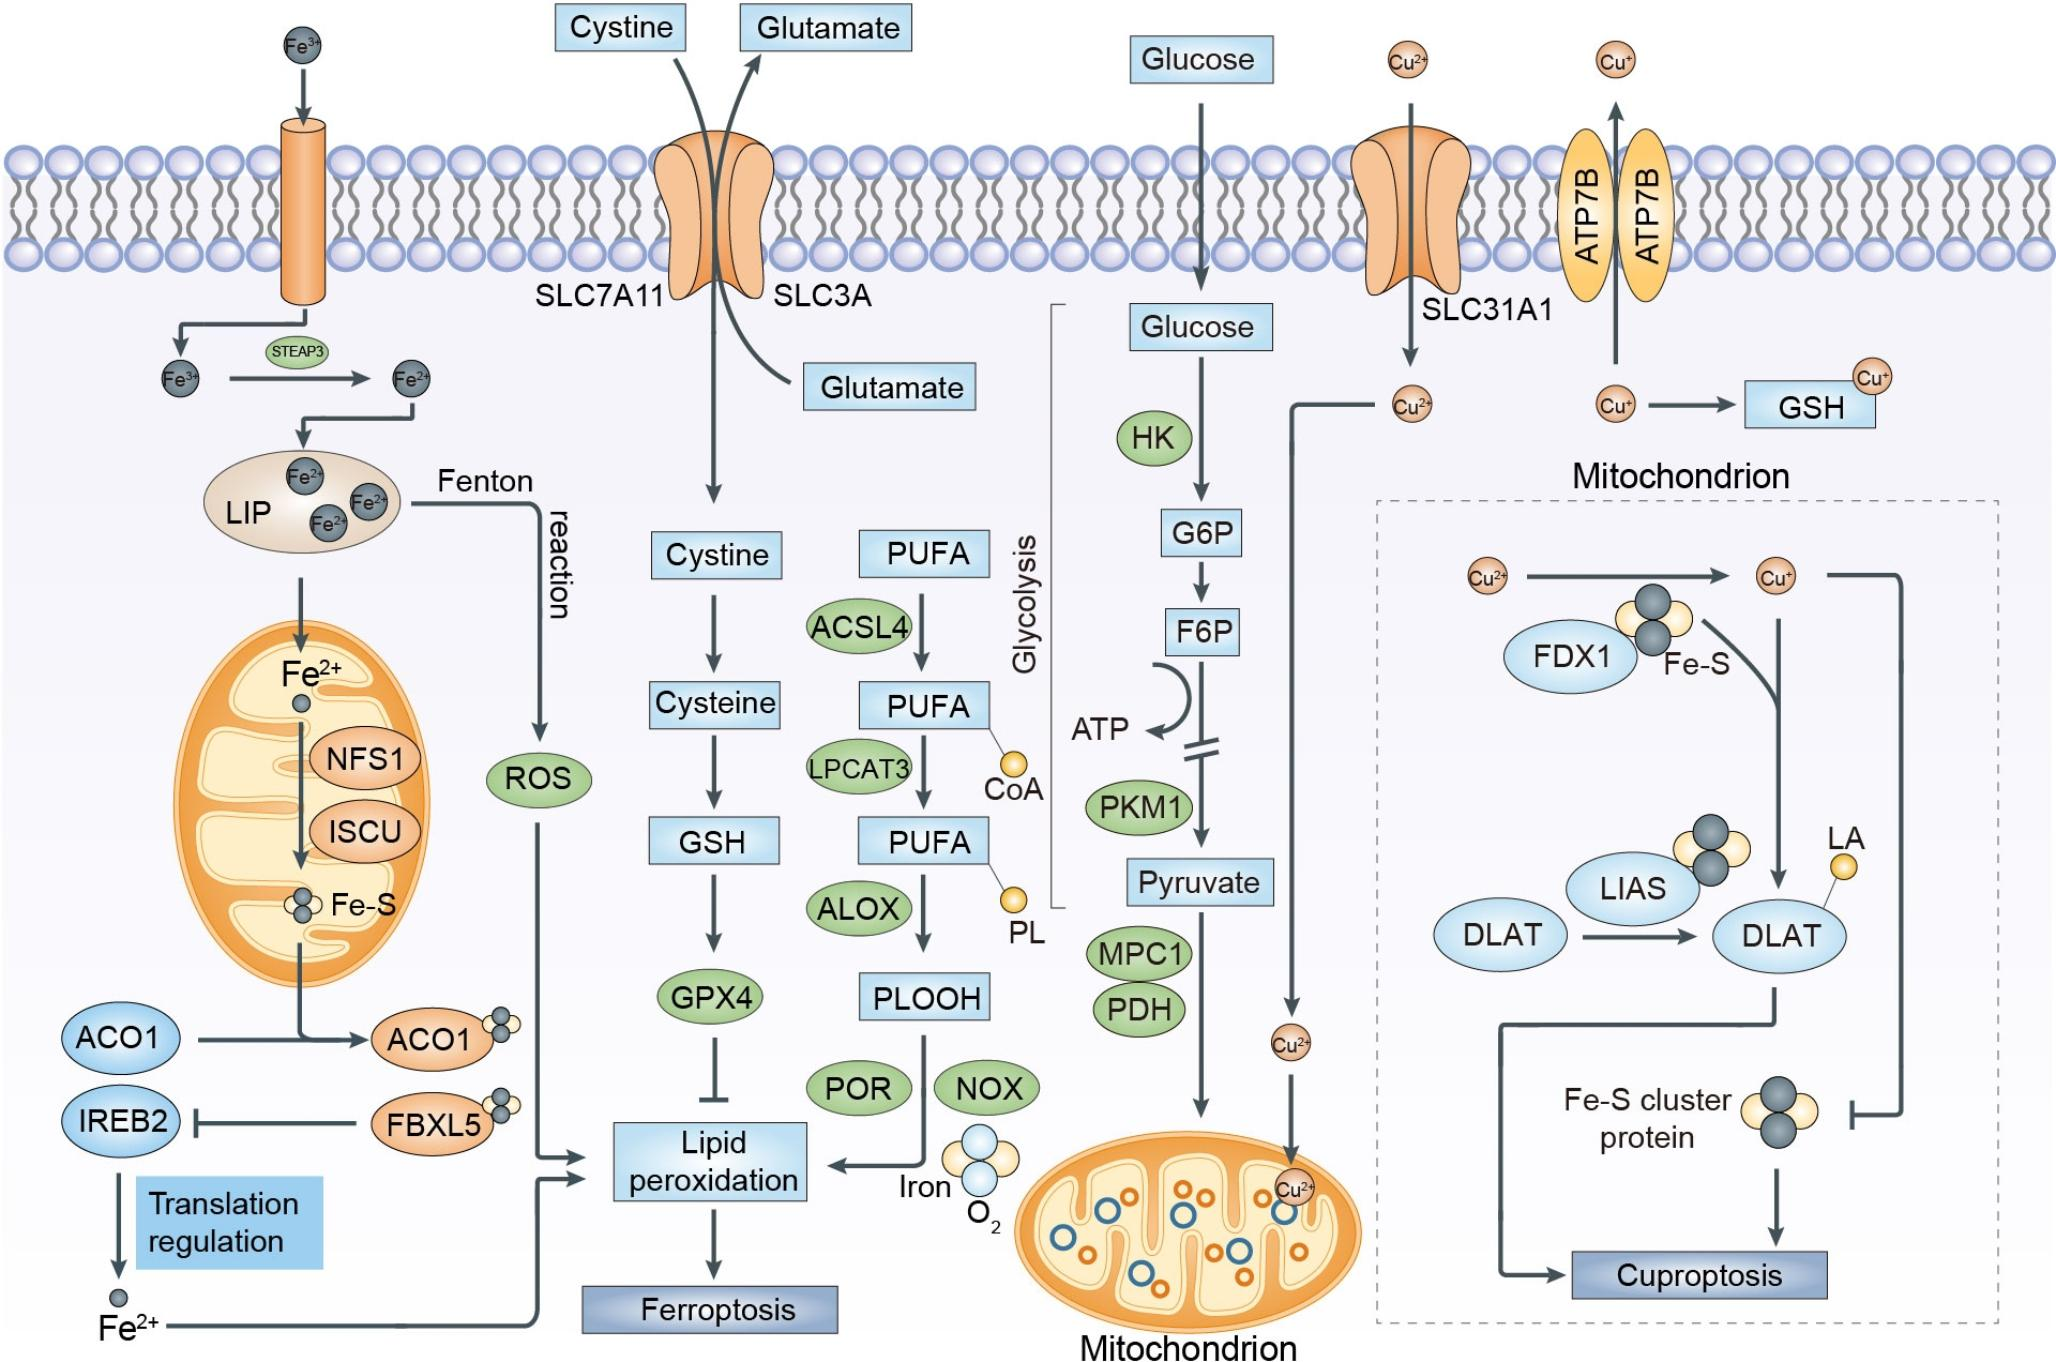 Ferroptosis and cuproptposis in kidney Diseases: dysfunction of cell metabolism